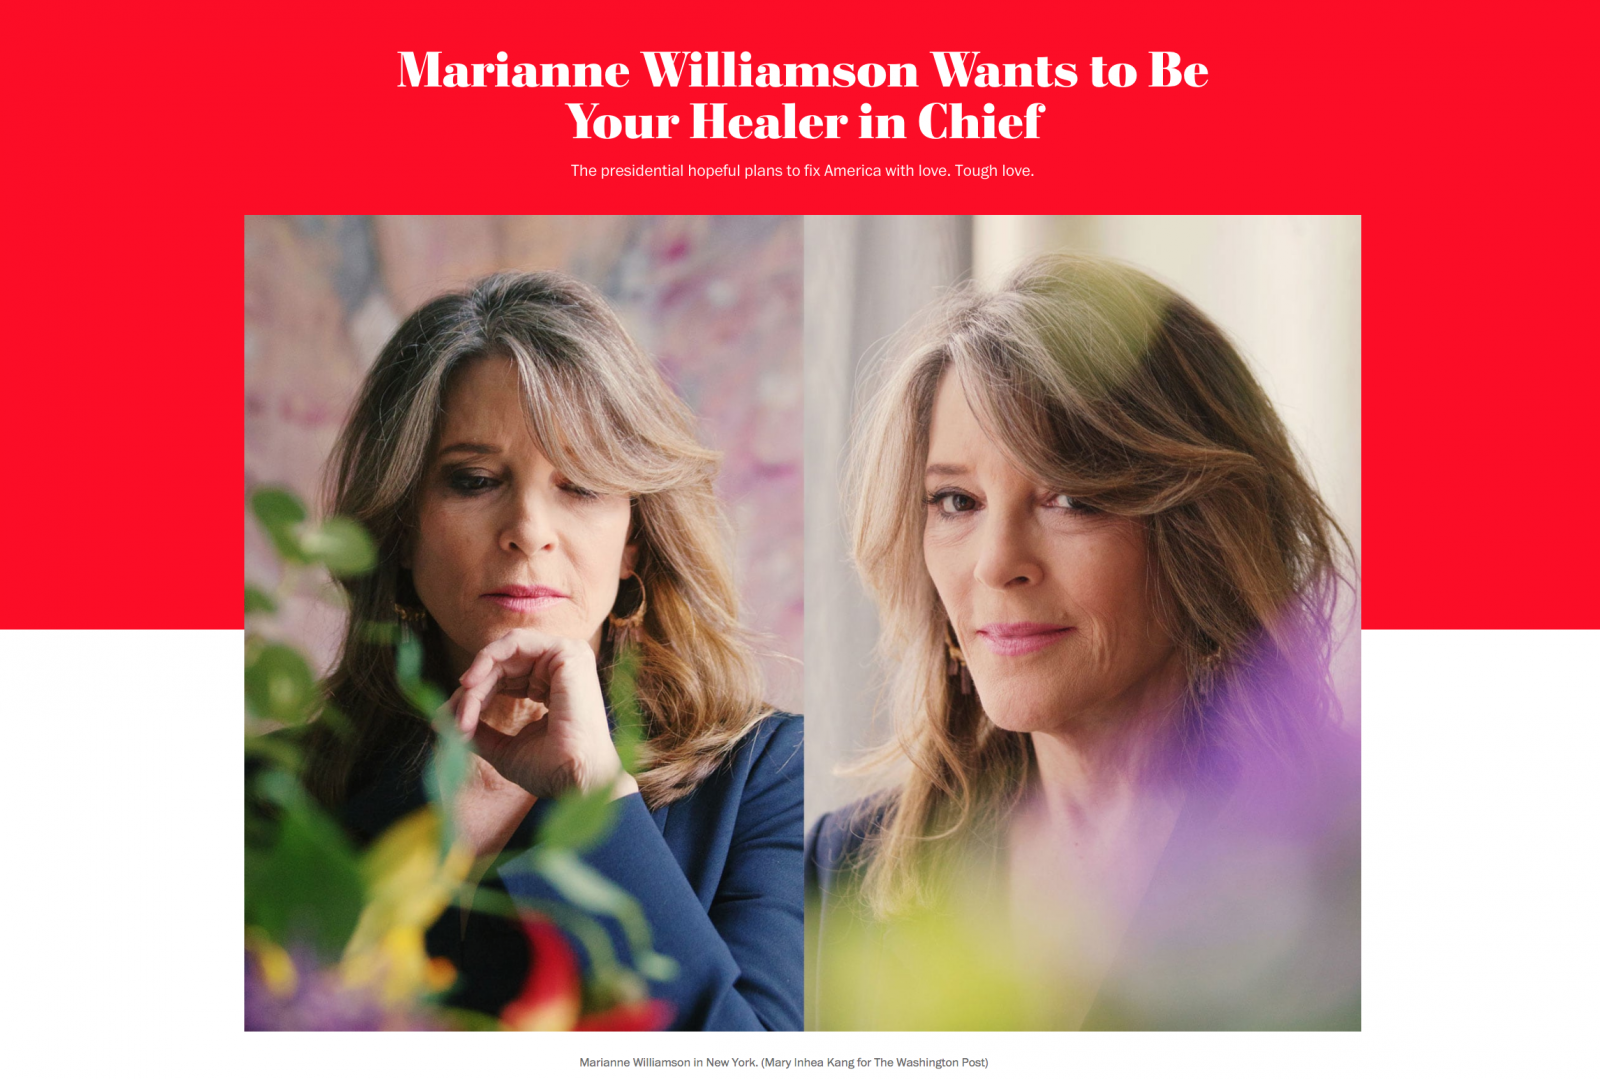 Marianne Williamson for the Washington Post